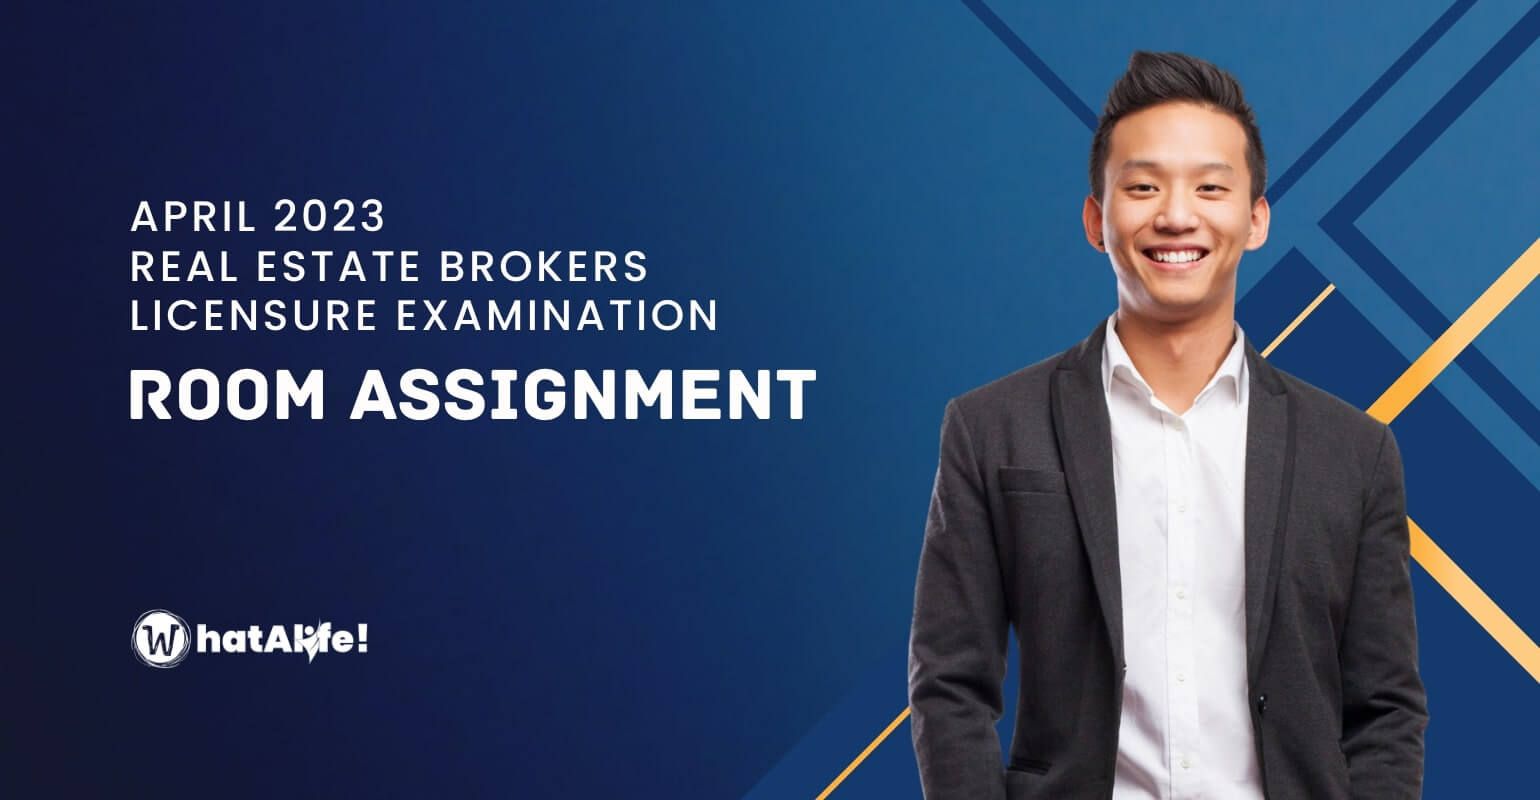 room assignment april 2023 real estate broker licensure exam